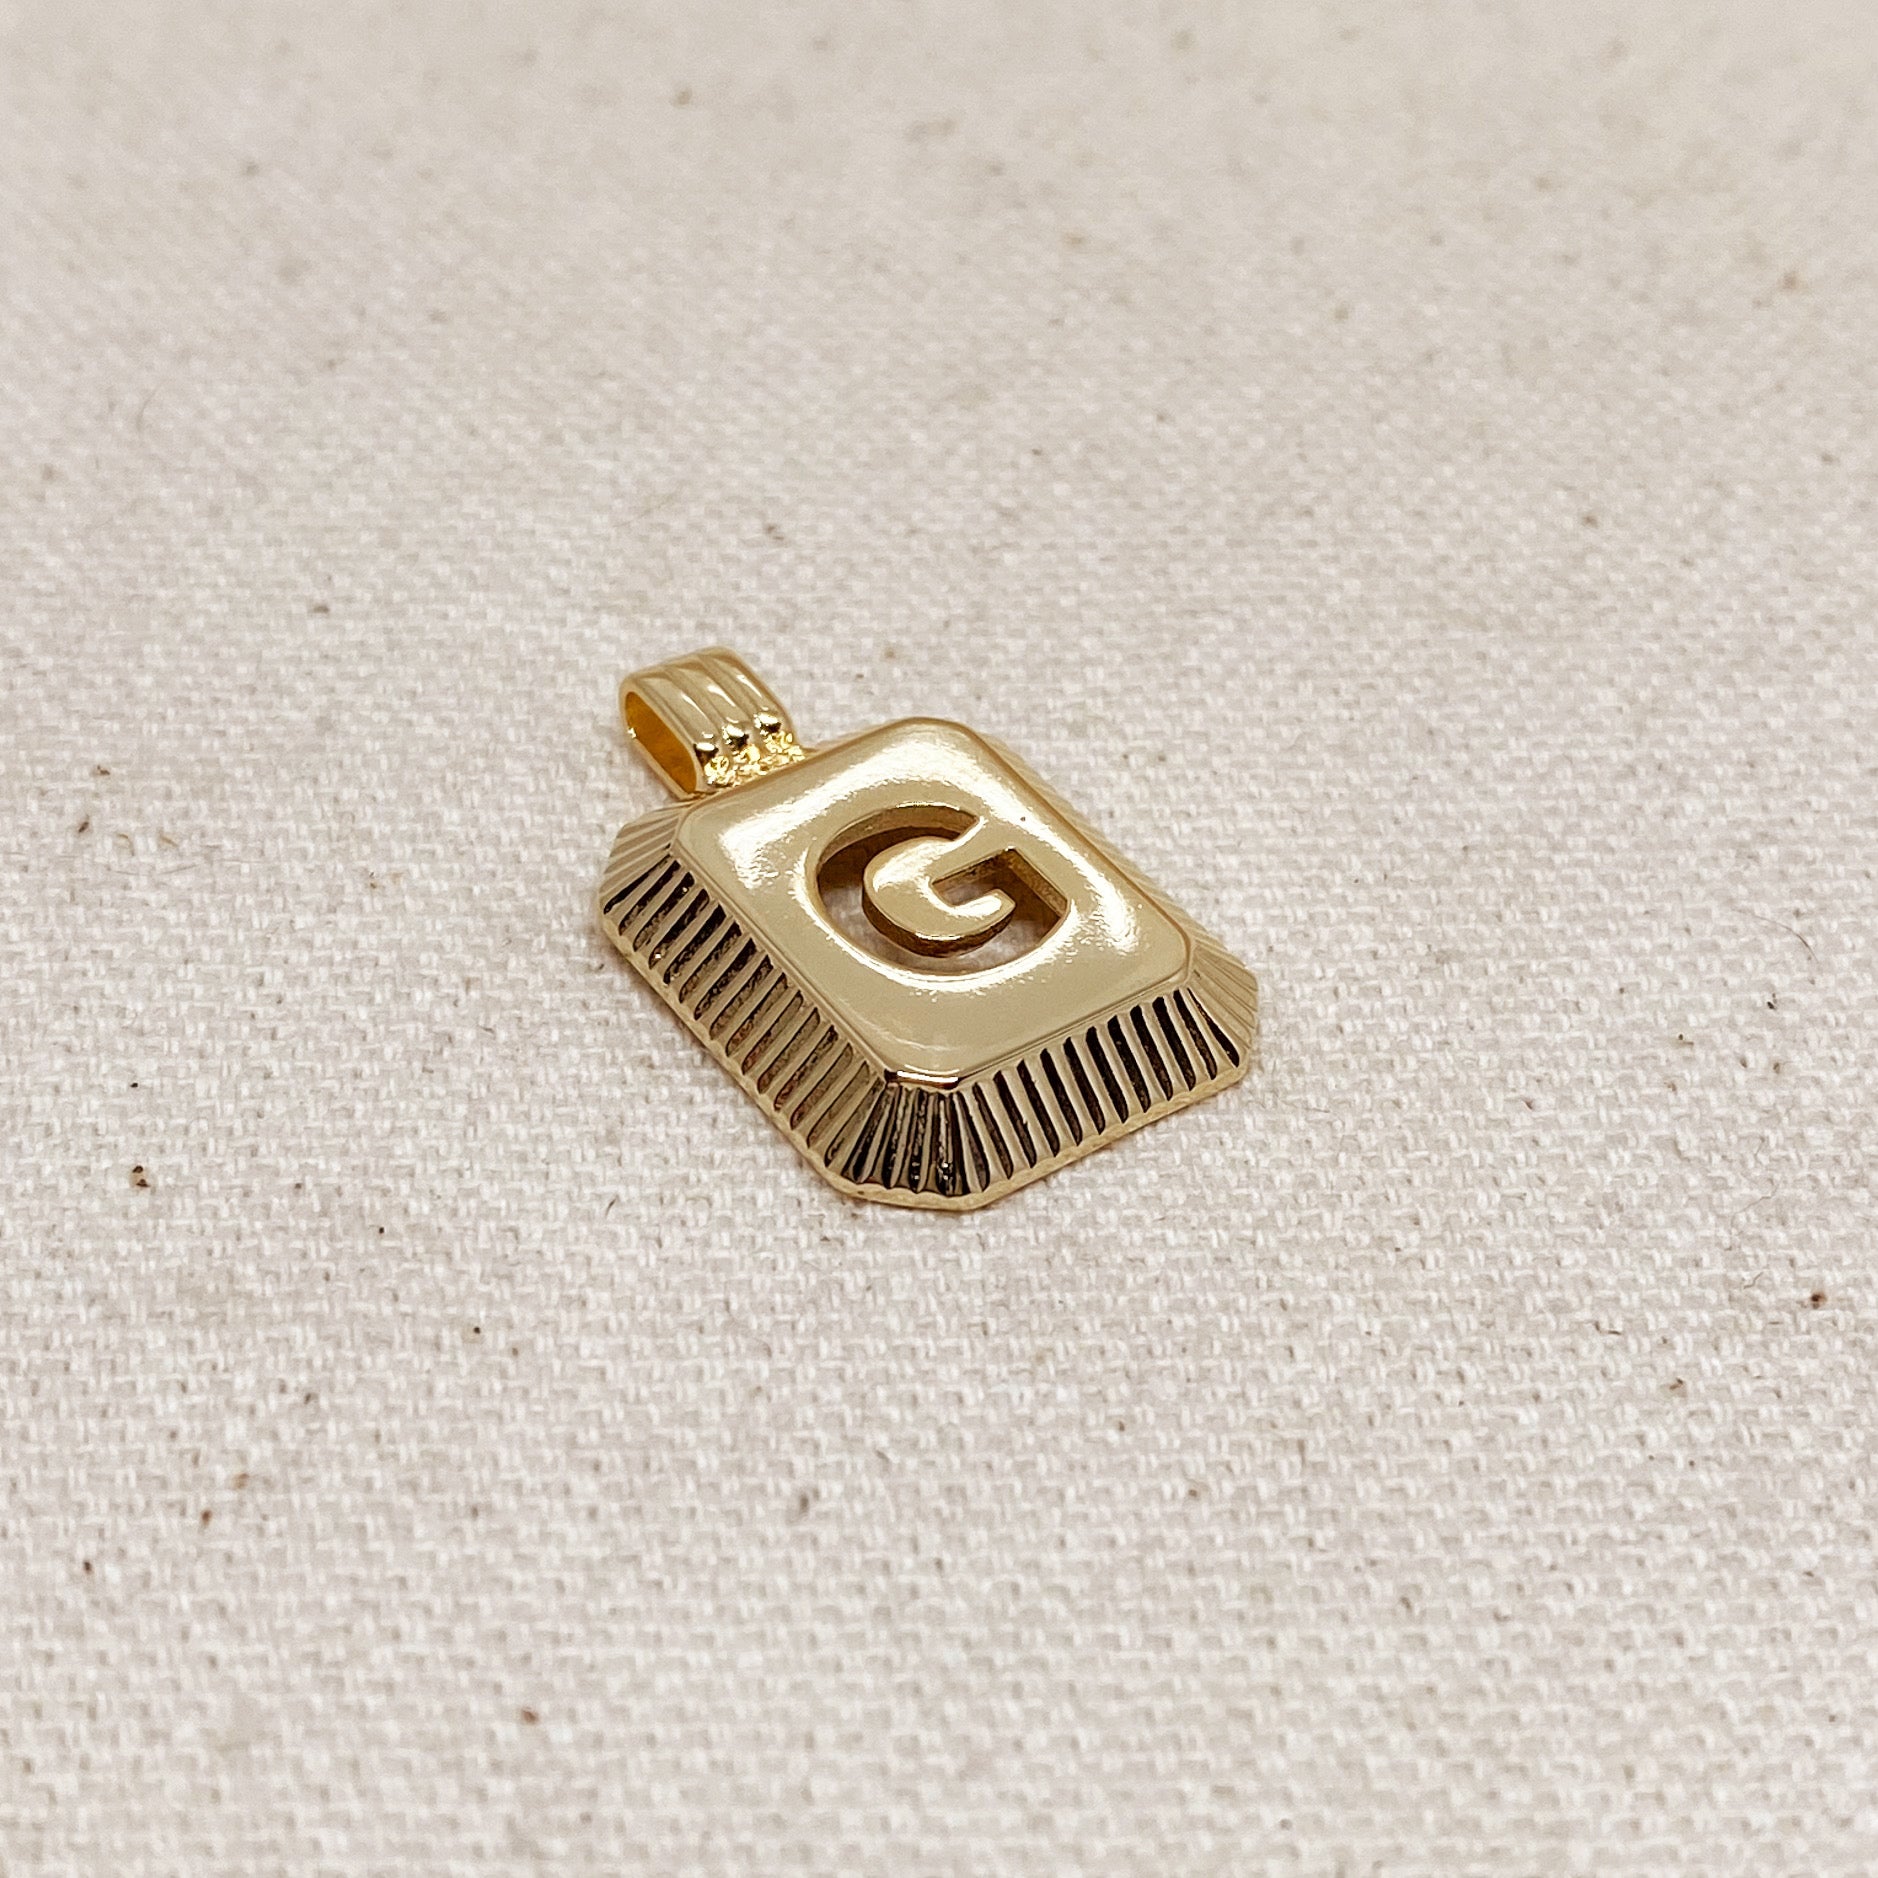 GoldFi 18k Gold Filled Initial Dainty Pendant